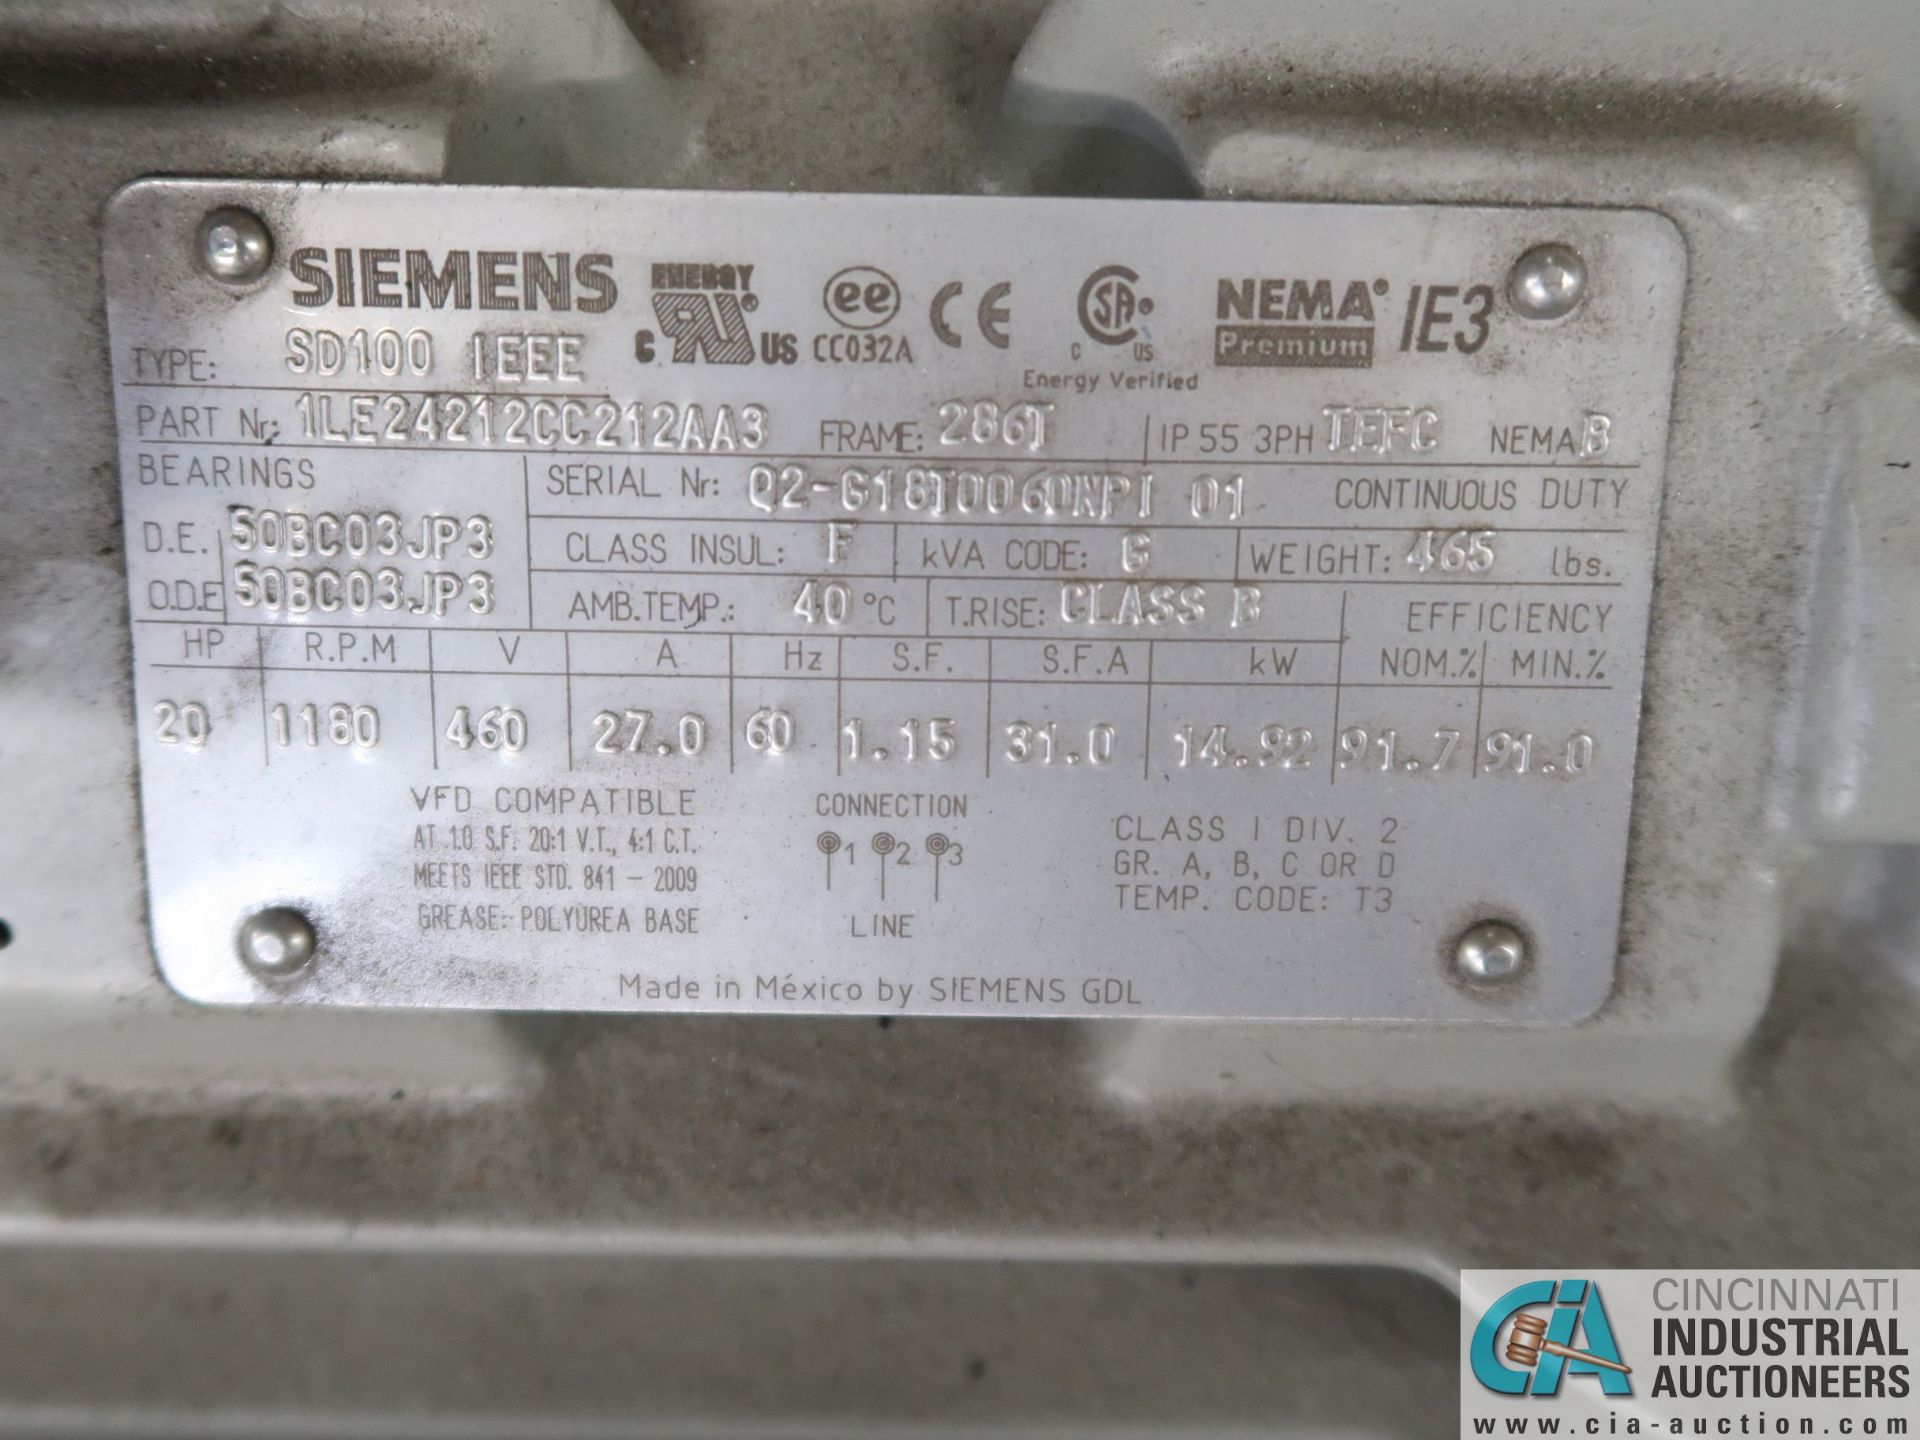 20 HP SIEMENS TYPE SD100 IEEE ELECTRIC MOTOR, 1,180 RPM (NEW) - Image 2 of 2